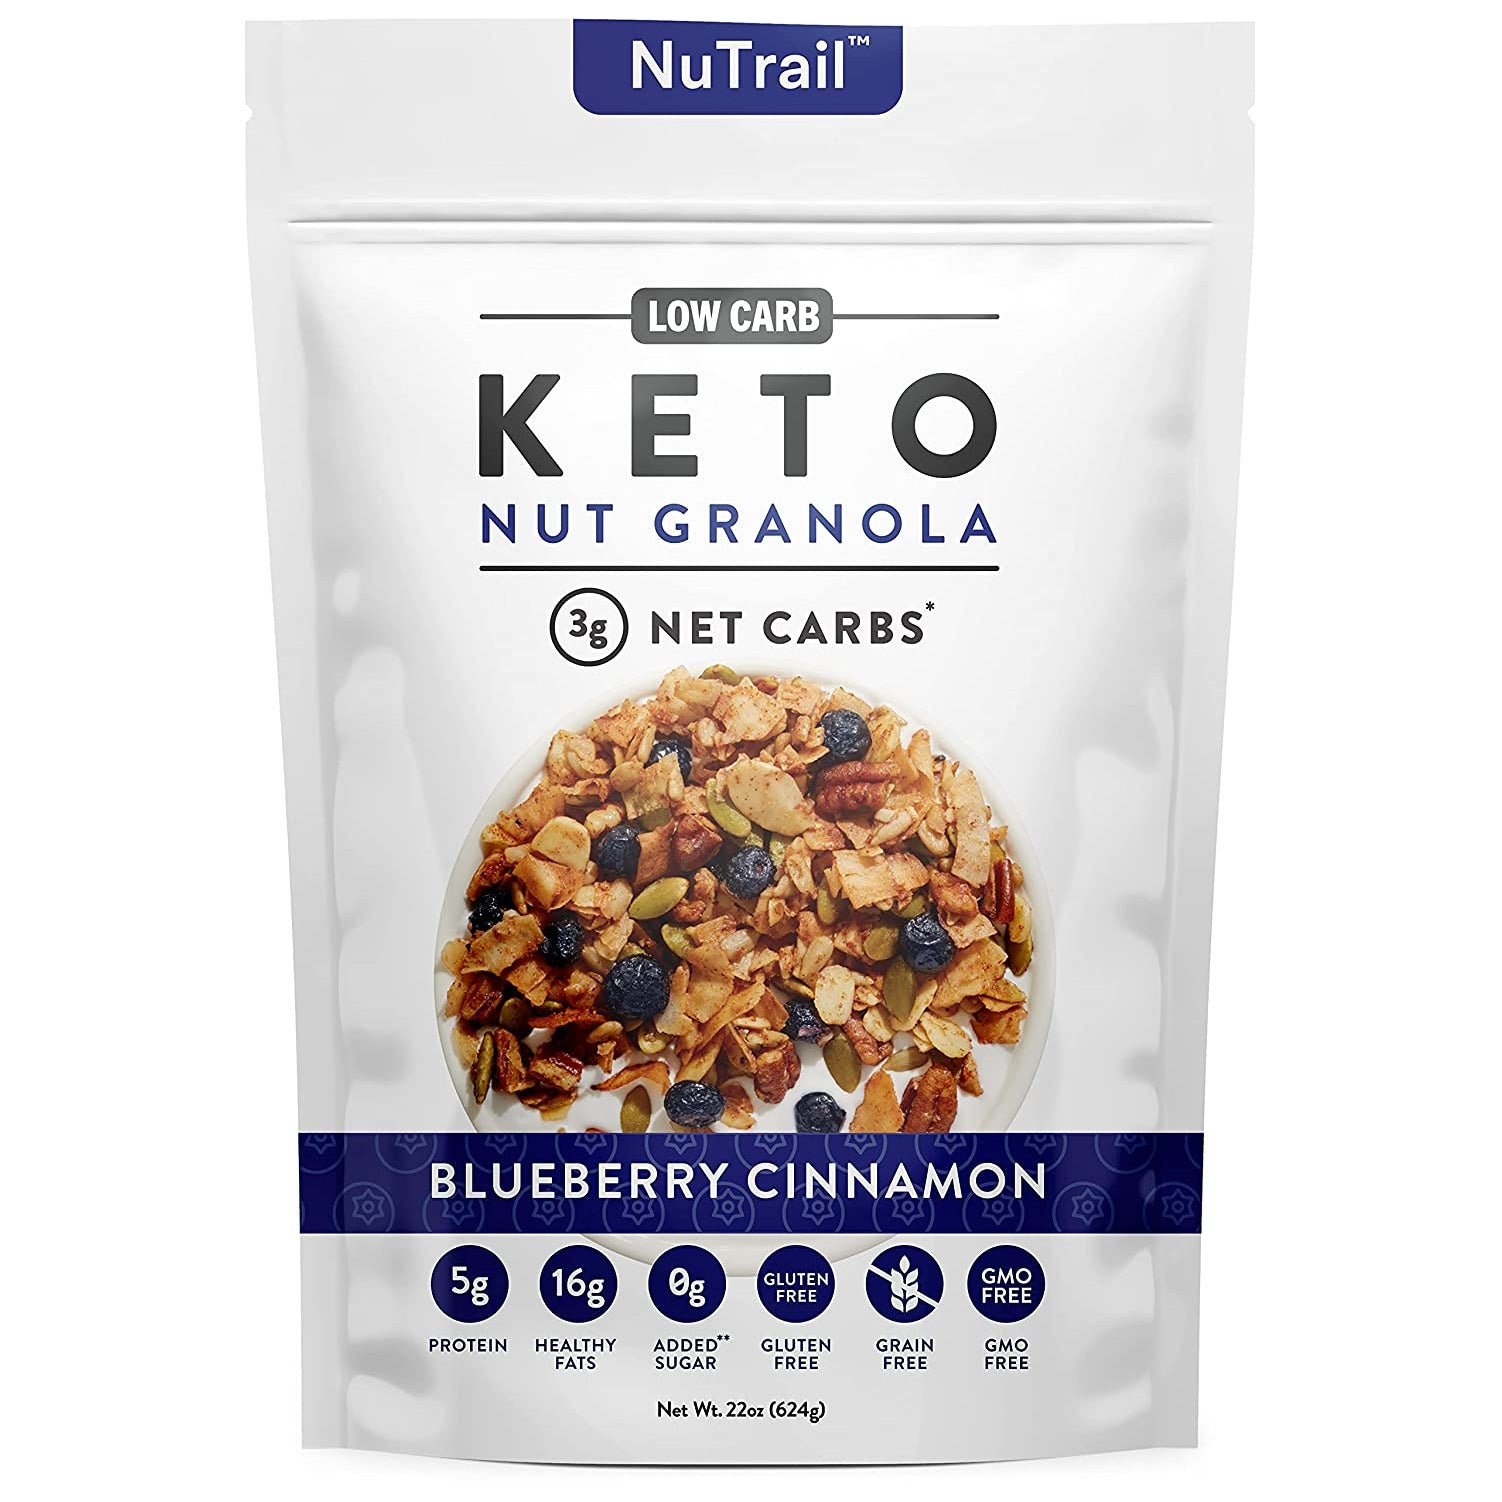 Low Carb Keto Nut Granola Blueberry Cinnamon, 22 Oz